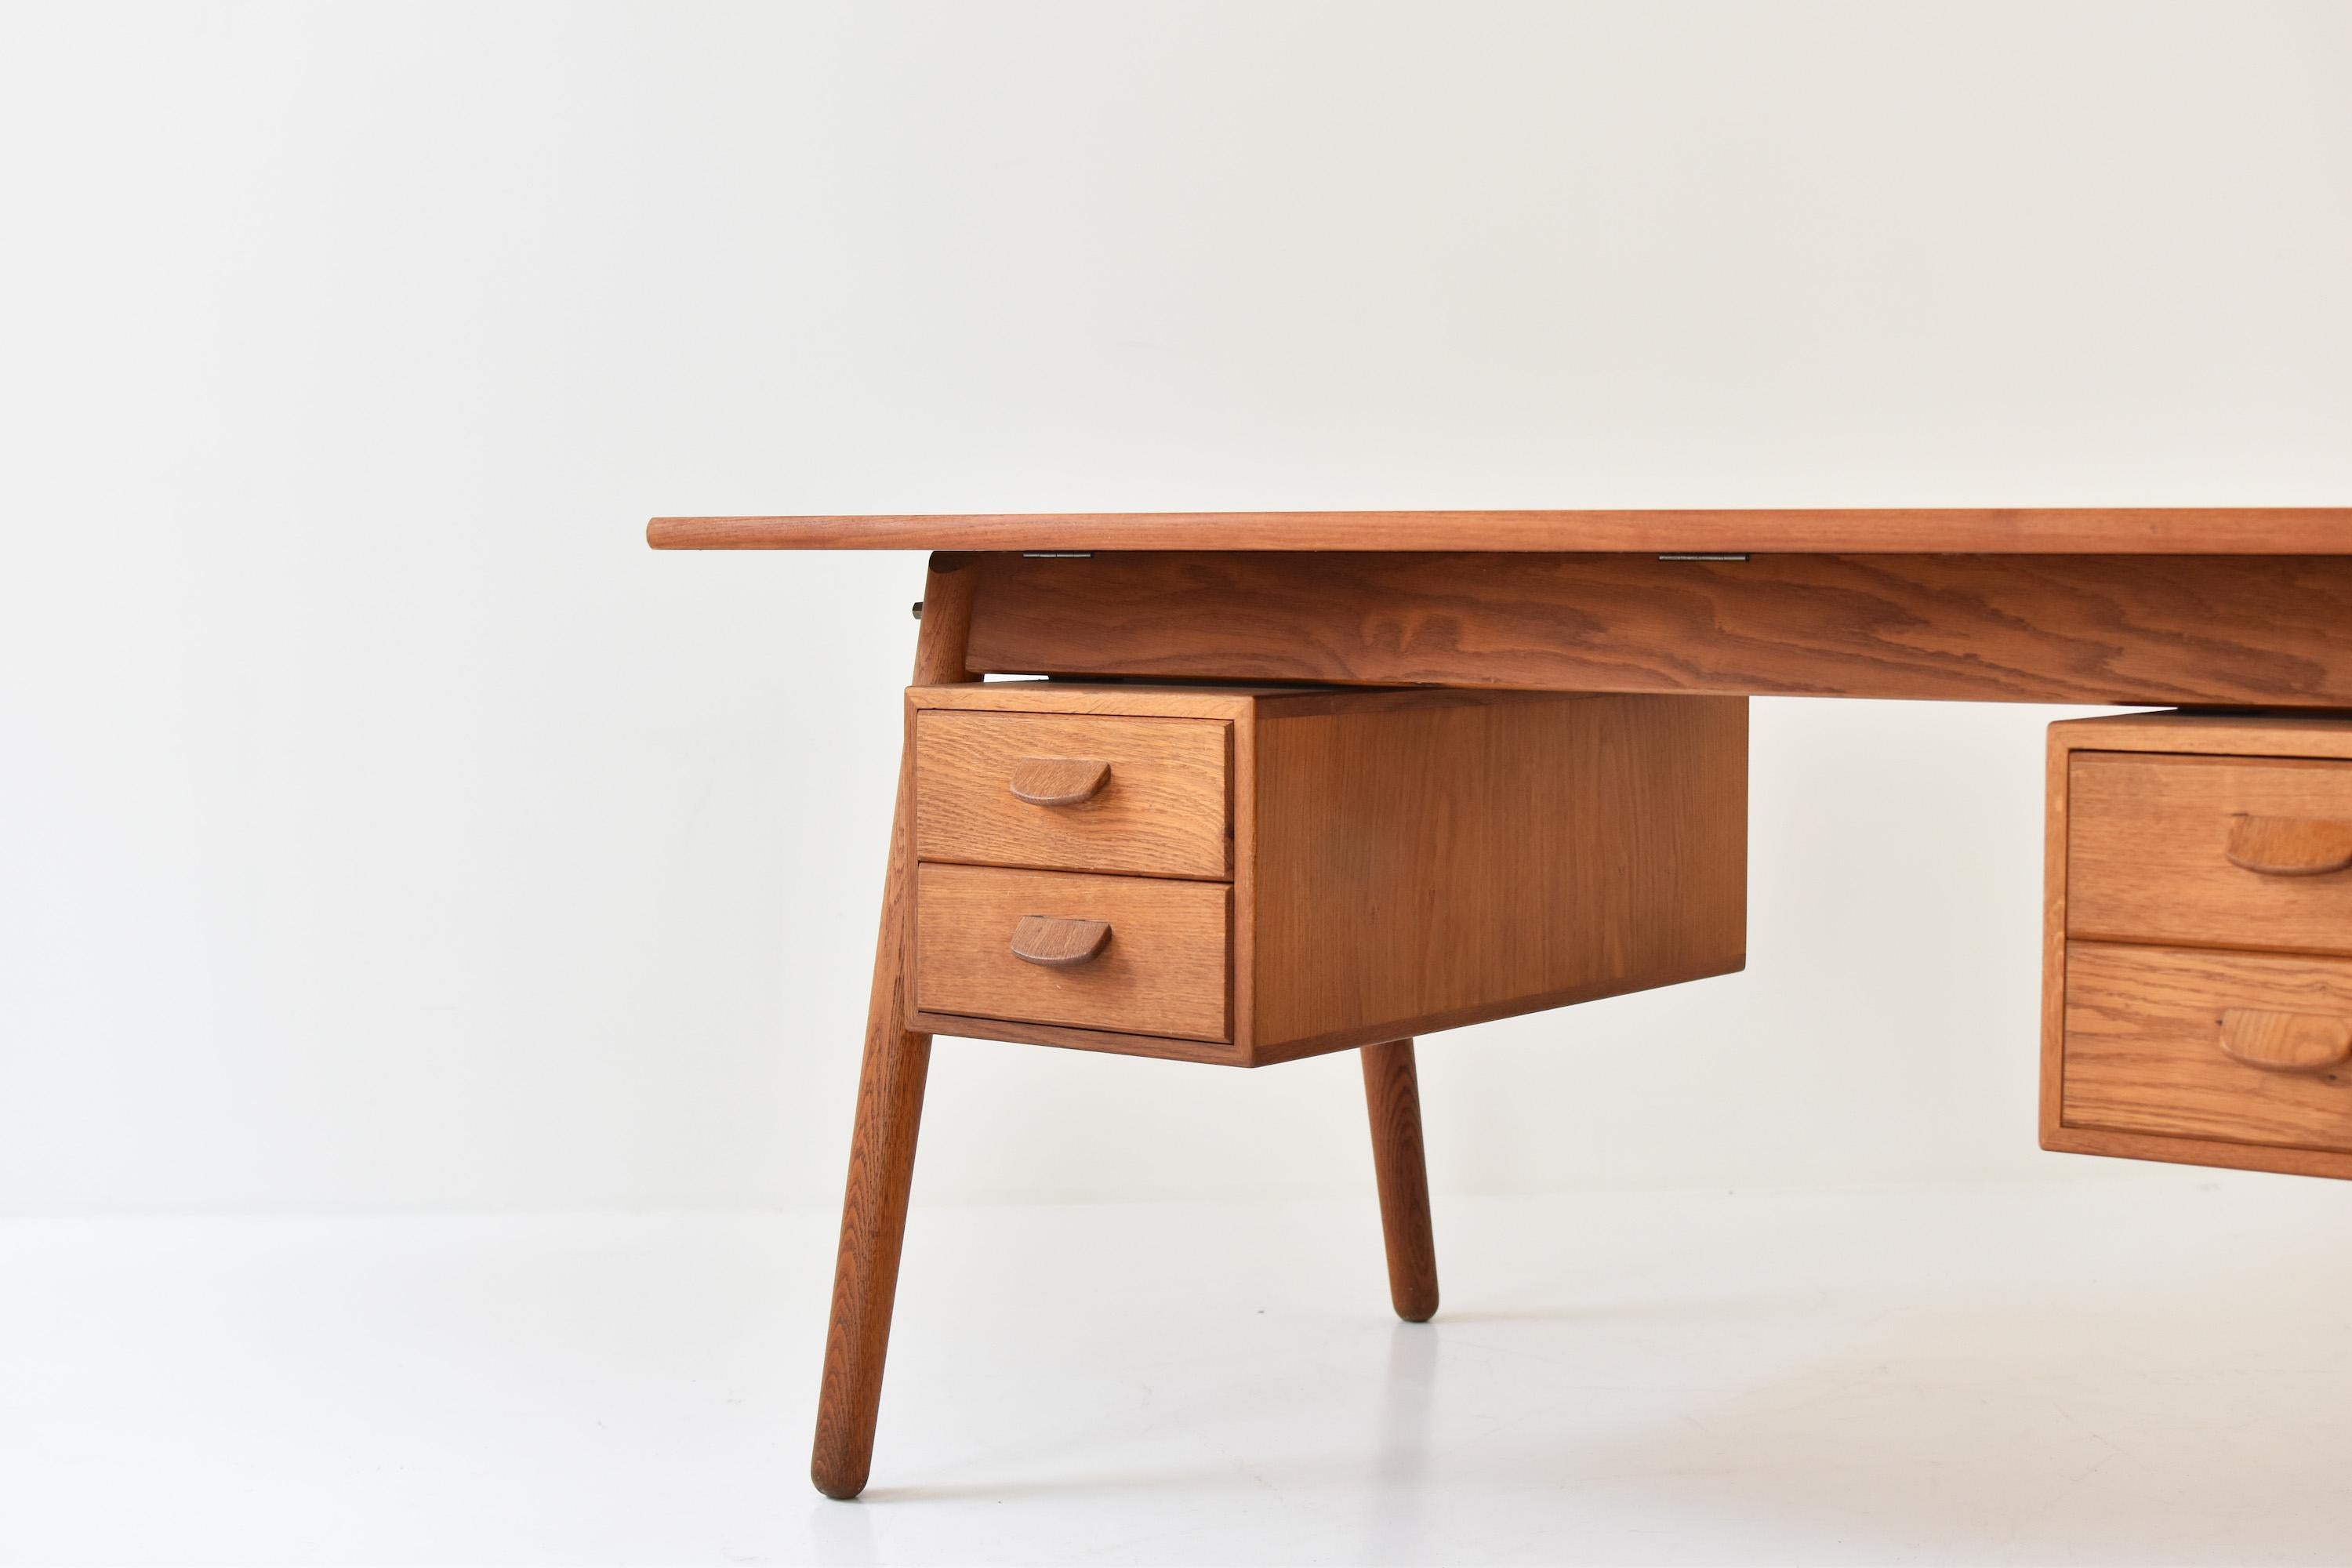 Scandinavian Modern Desk or Dining Table Designed by Poul Volther for FDB Mobler, Denmark, 1950’s